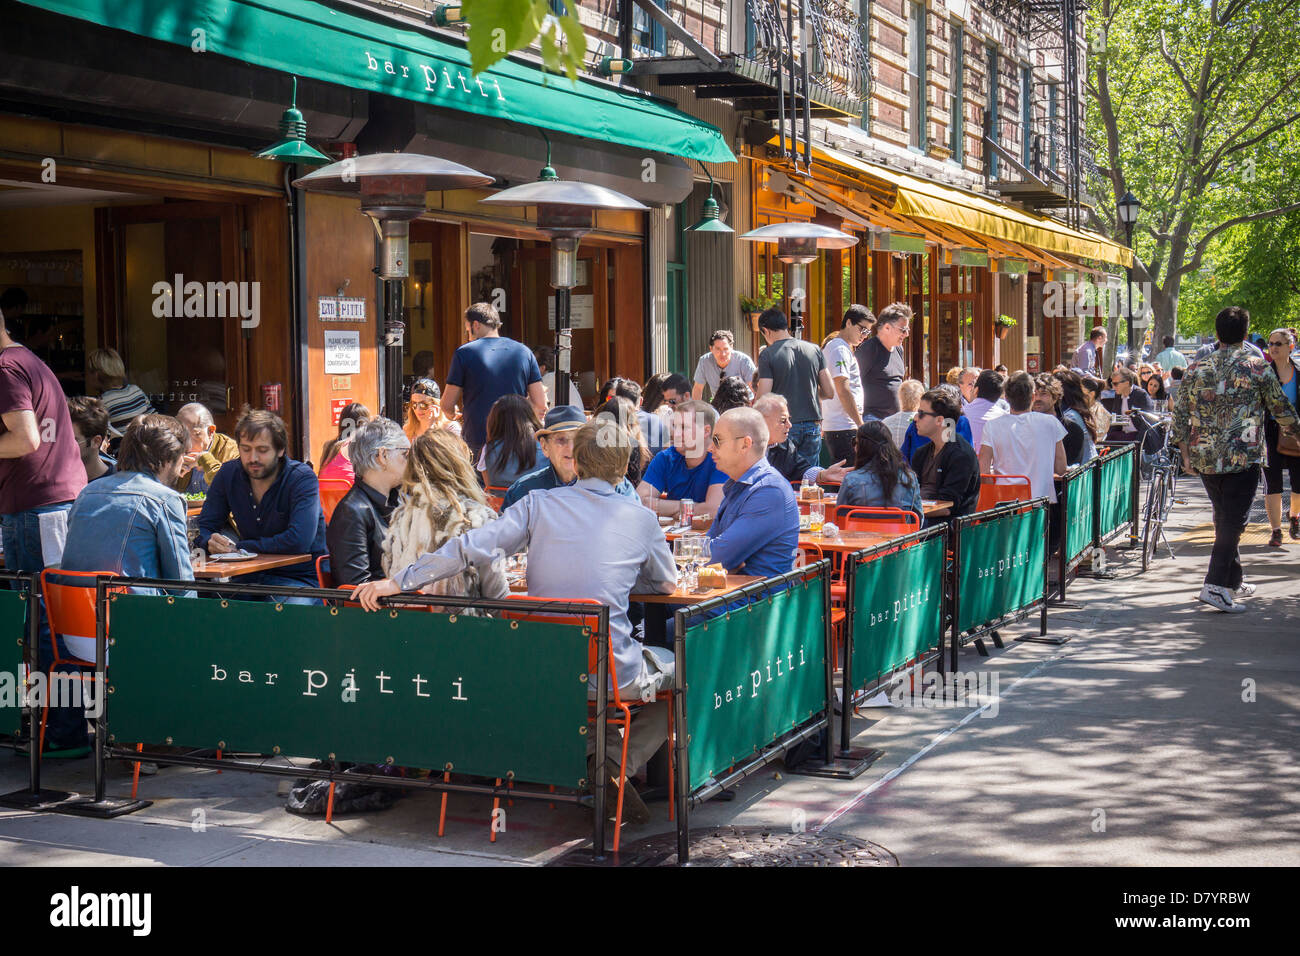 Busy Al Fresco Dining At Bar Pitti Sidewalk Cafe On Sixth Avenue In The New York Neighborhood Of